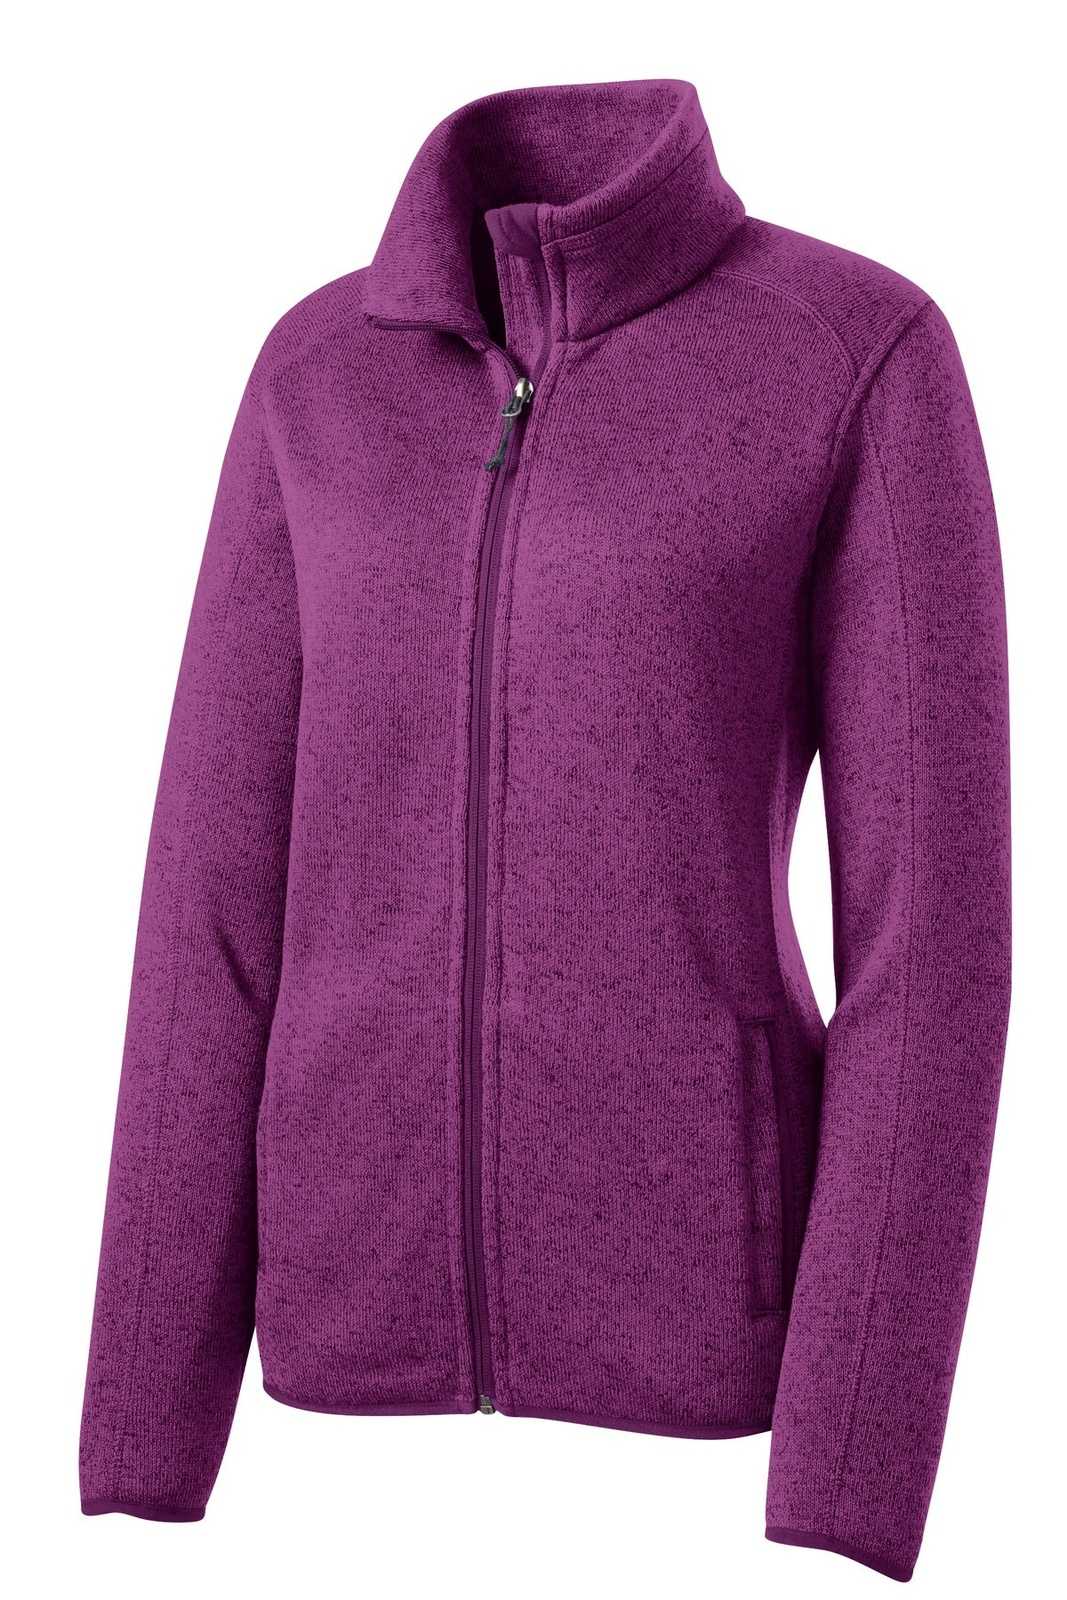 Port Authority L232 Ladies Sweater Fleece Jacket - Pink Heather - HIT a Double - 5